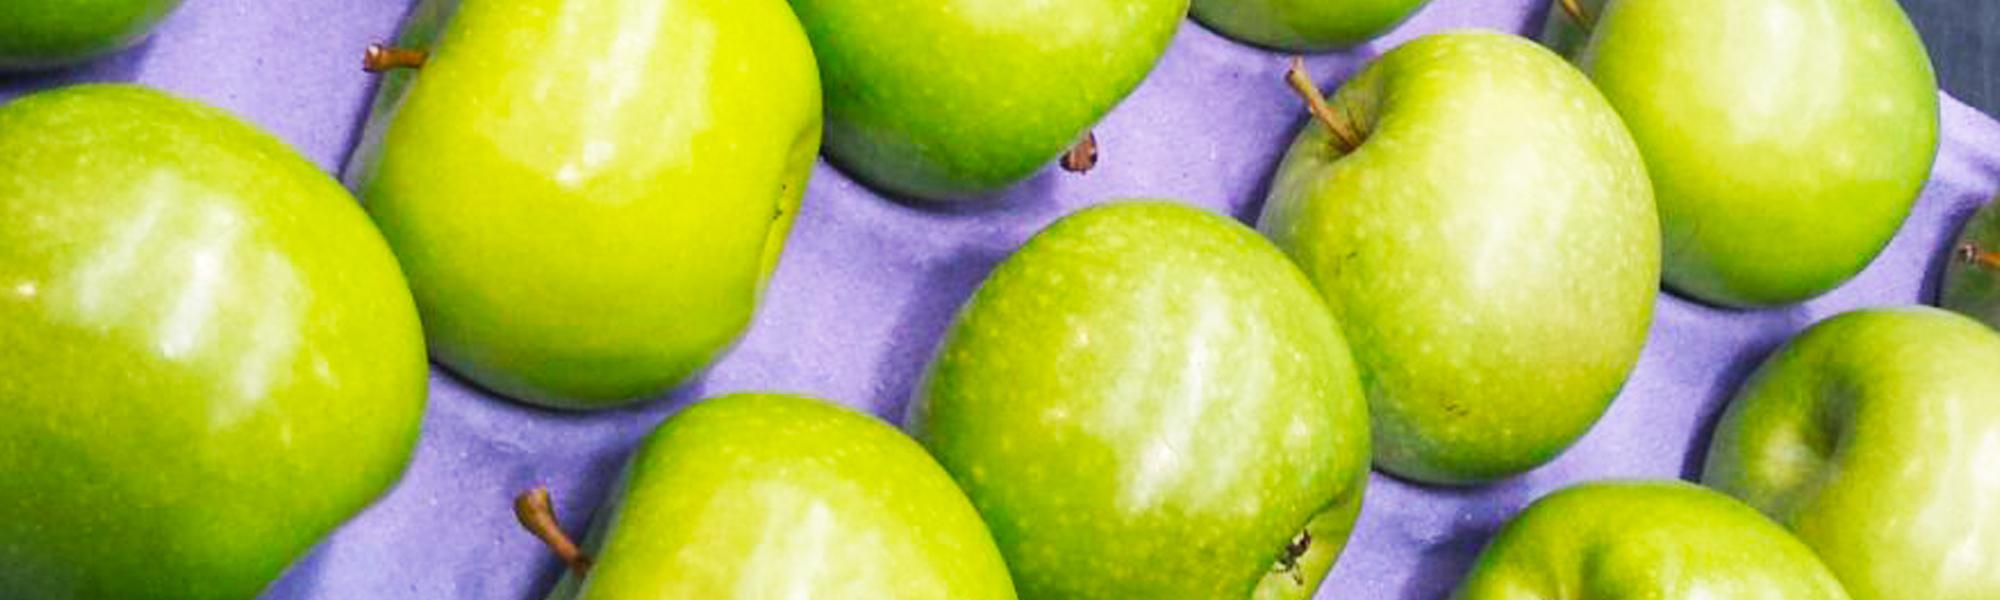 eliovero import/export - Our apples